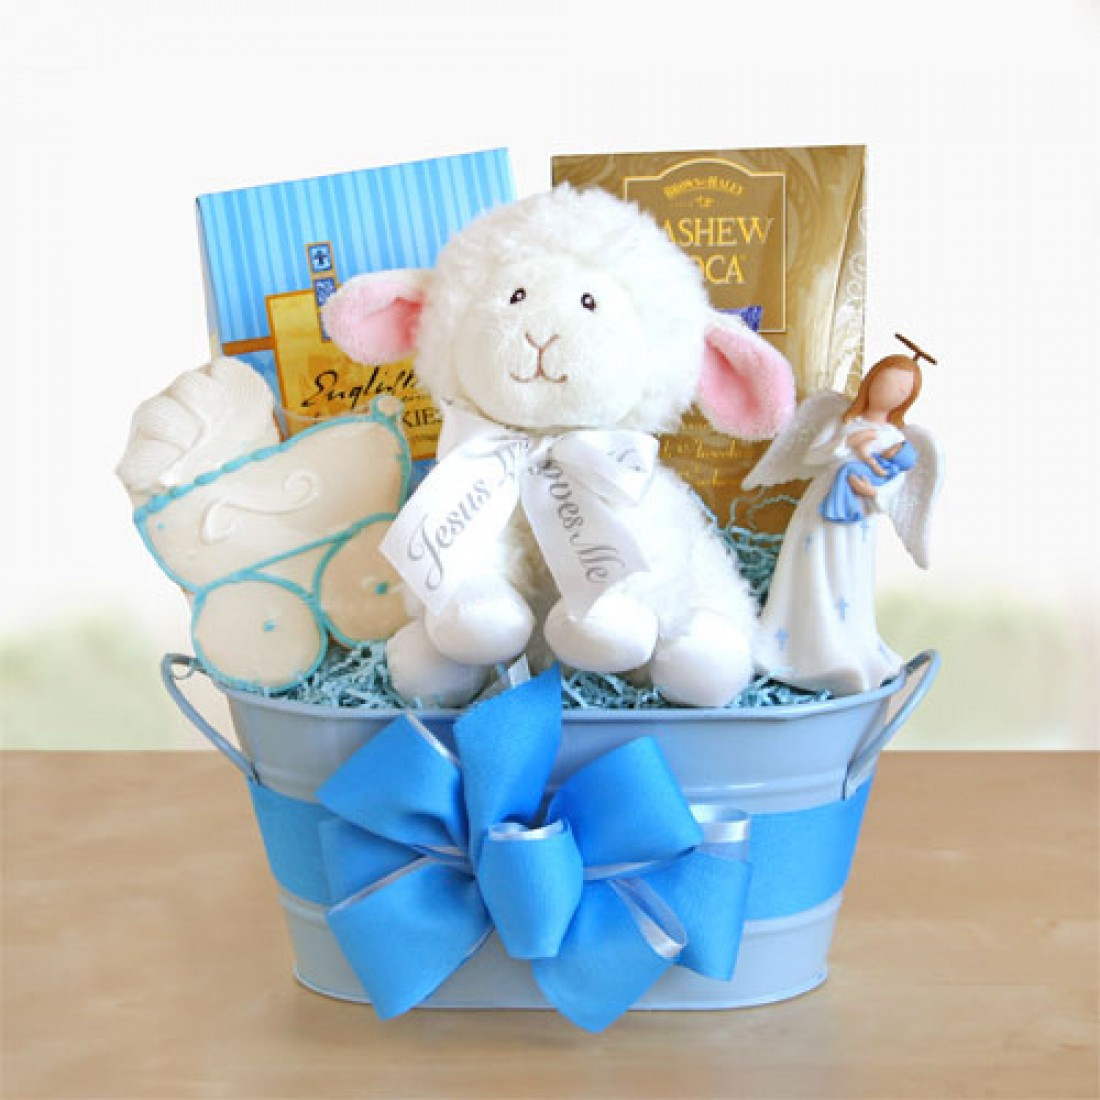 Baby Christening Gift Idea
 Blue Boy Christening Gift Baskets